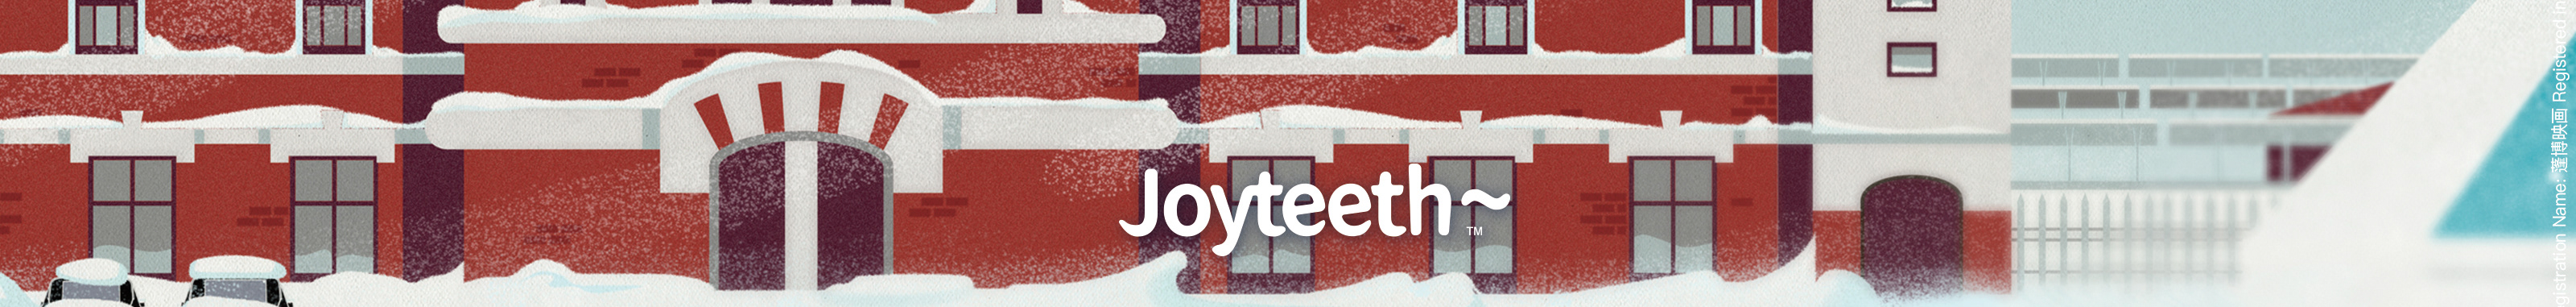 Joyteeth ~'s profile banner